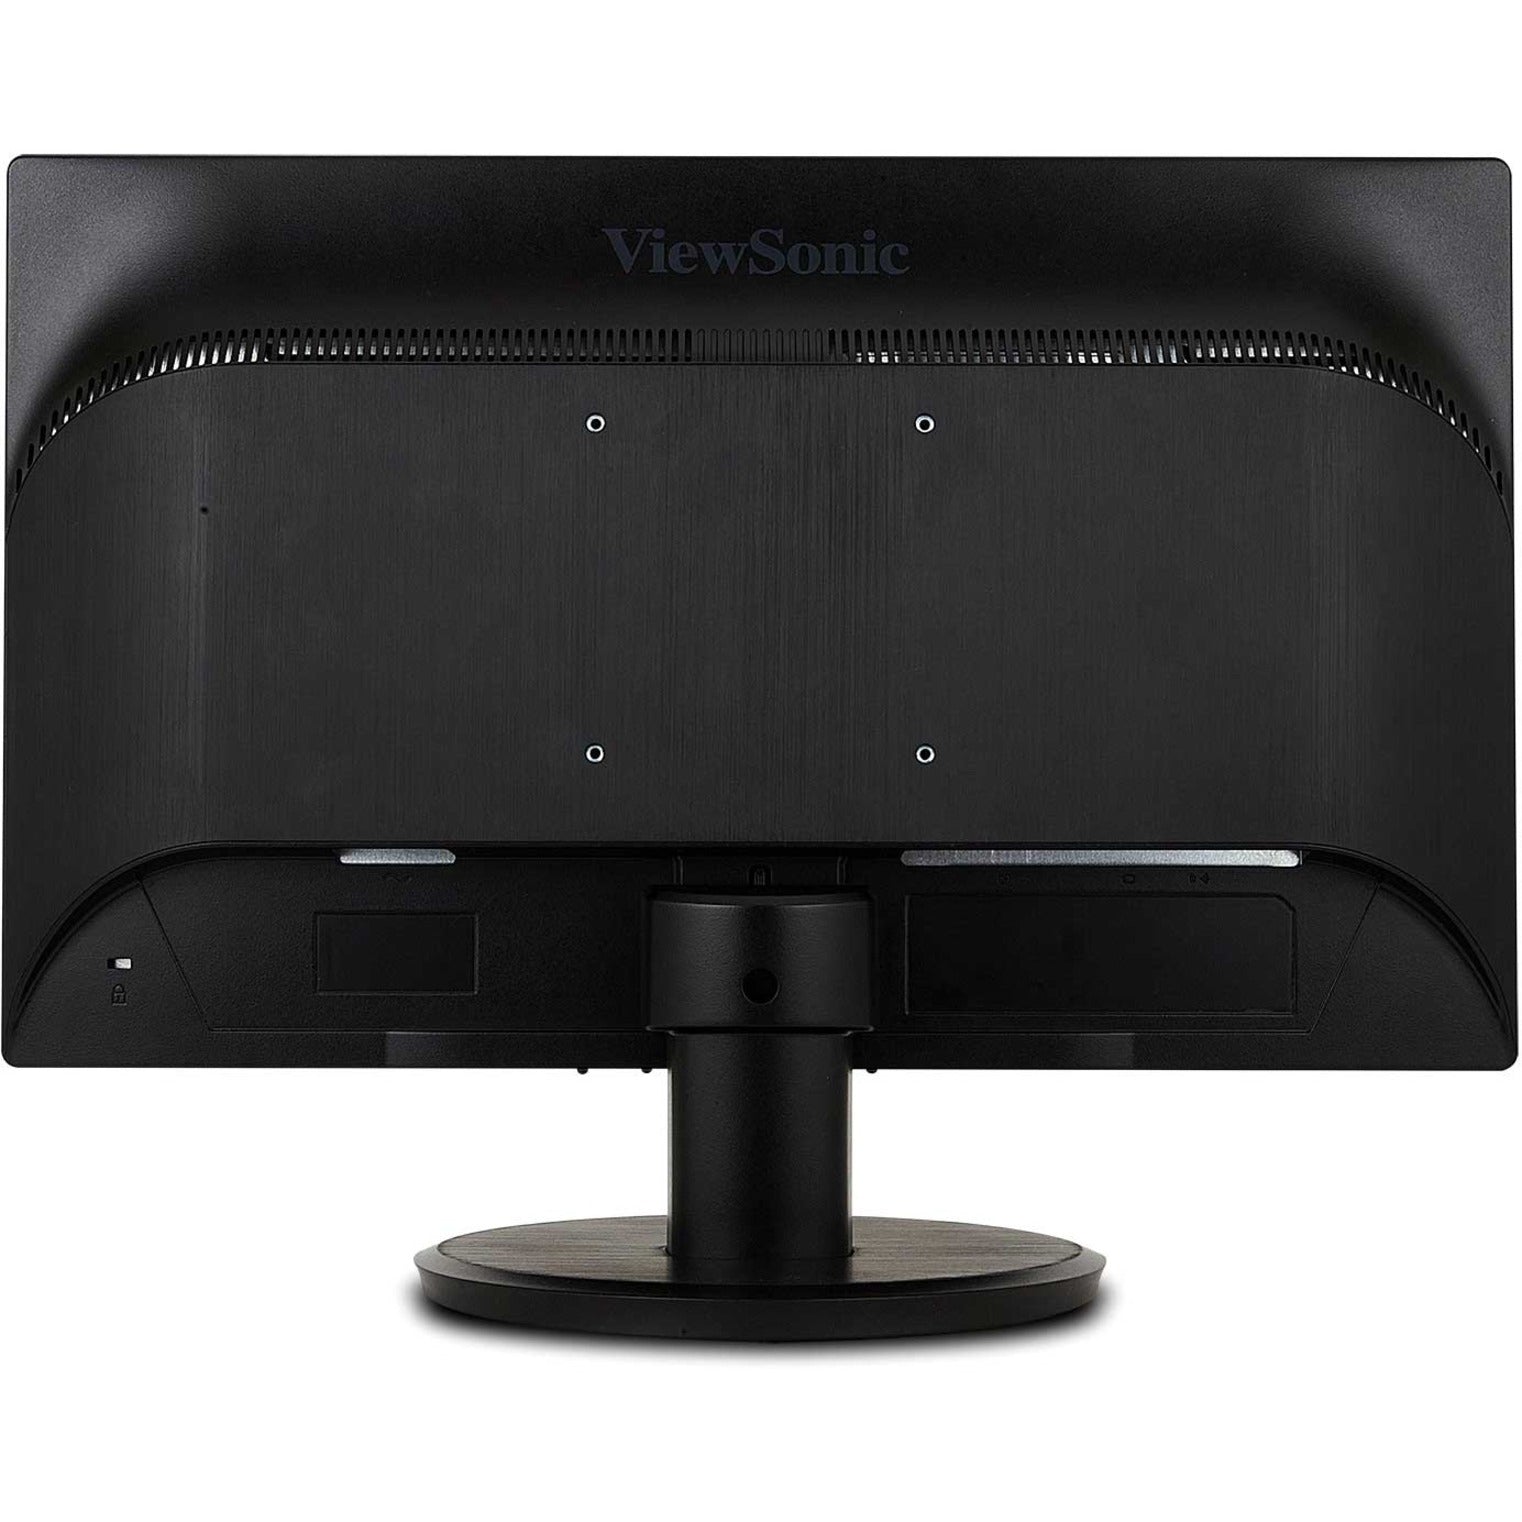 ViewSonic VA2055SM 20IN WS LED 1080P Full HD Monitor, SuperClear MVA Panel, VGA DVI, 3 Year Warranty